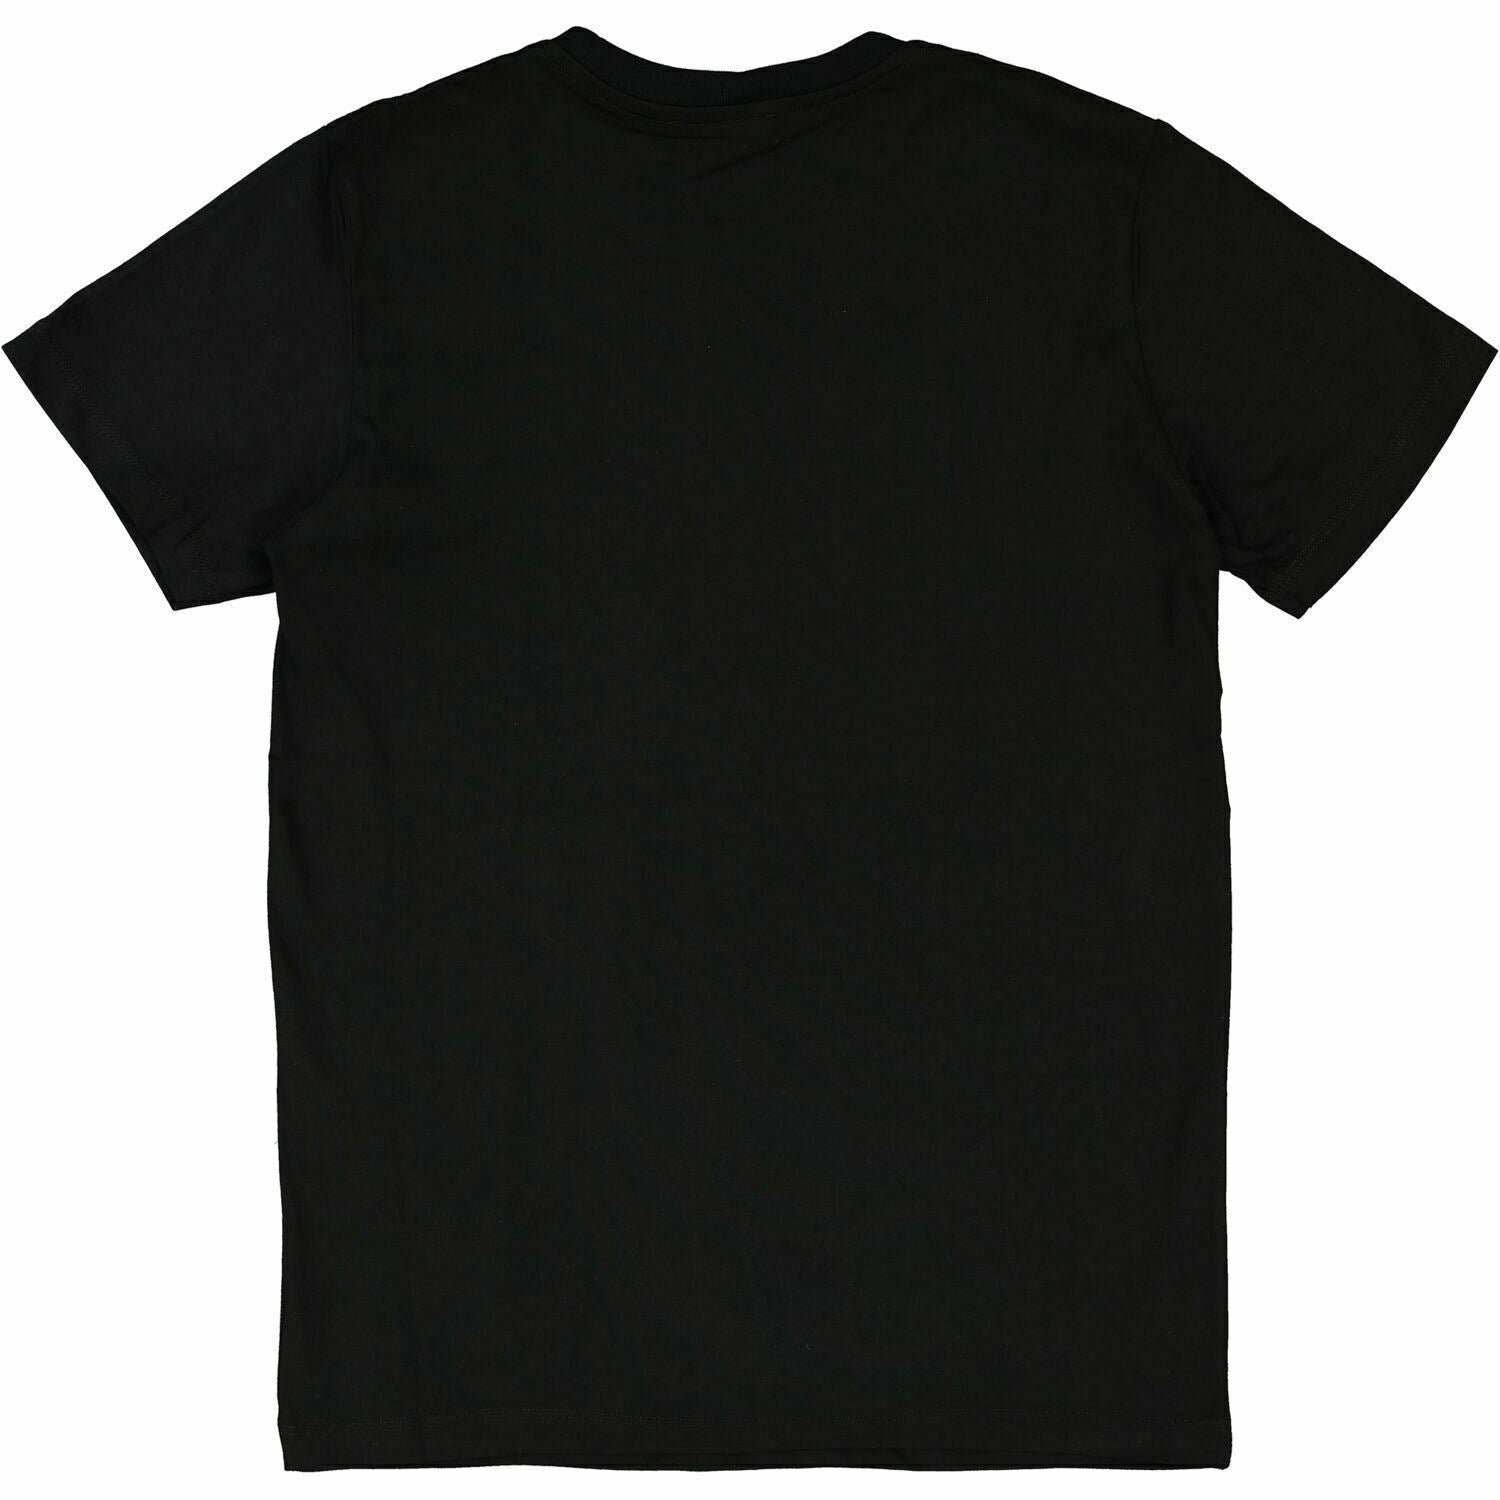 TRUSSARDI JUNIOR Boys’ Short Sleeve Printed T-Shirt, Black, size 4 years